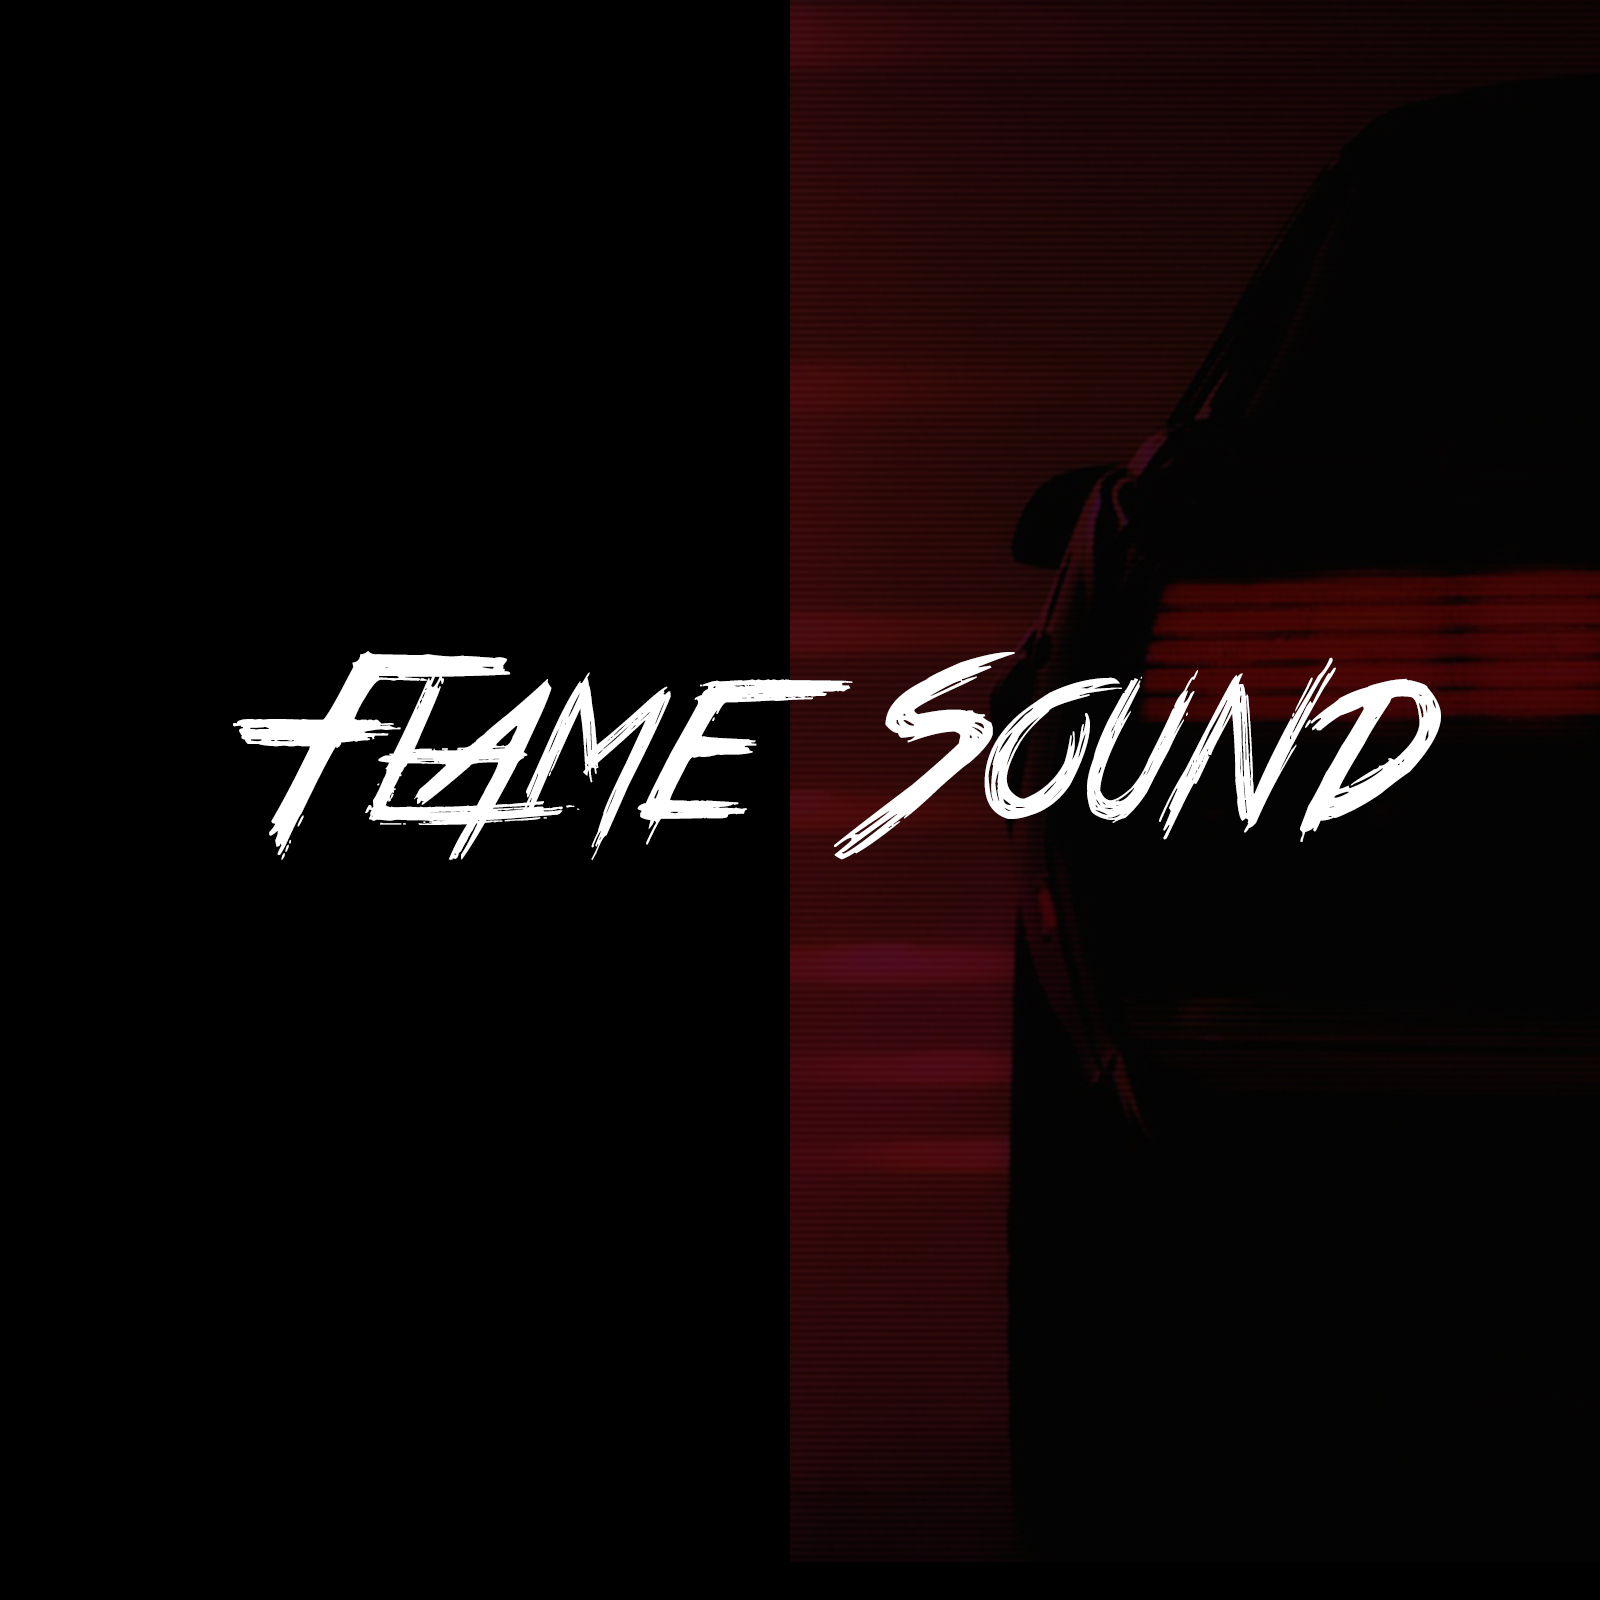 Flame Sound